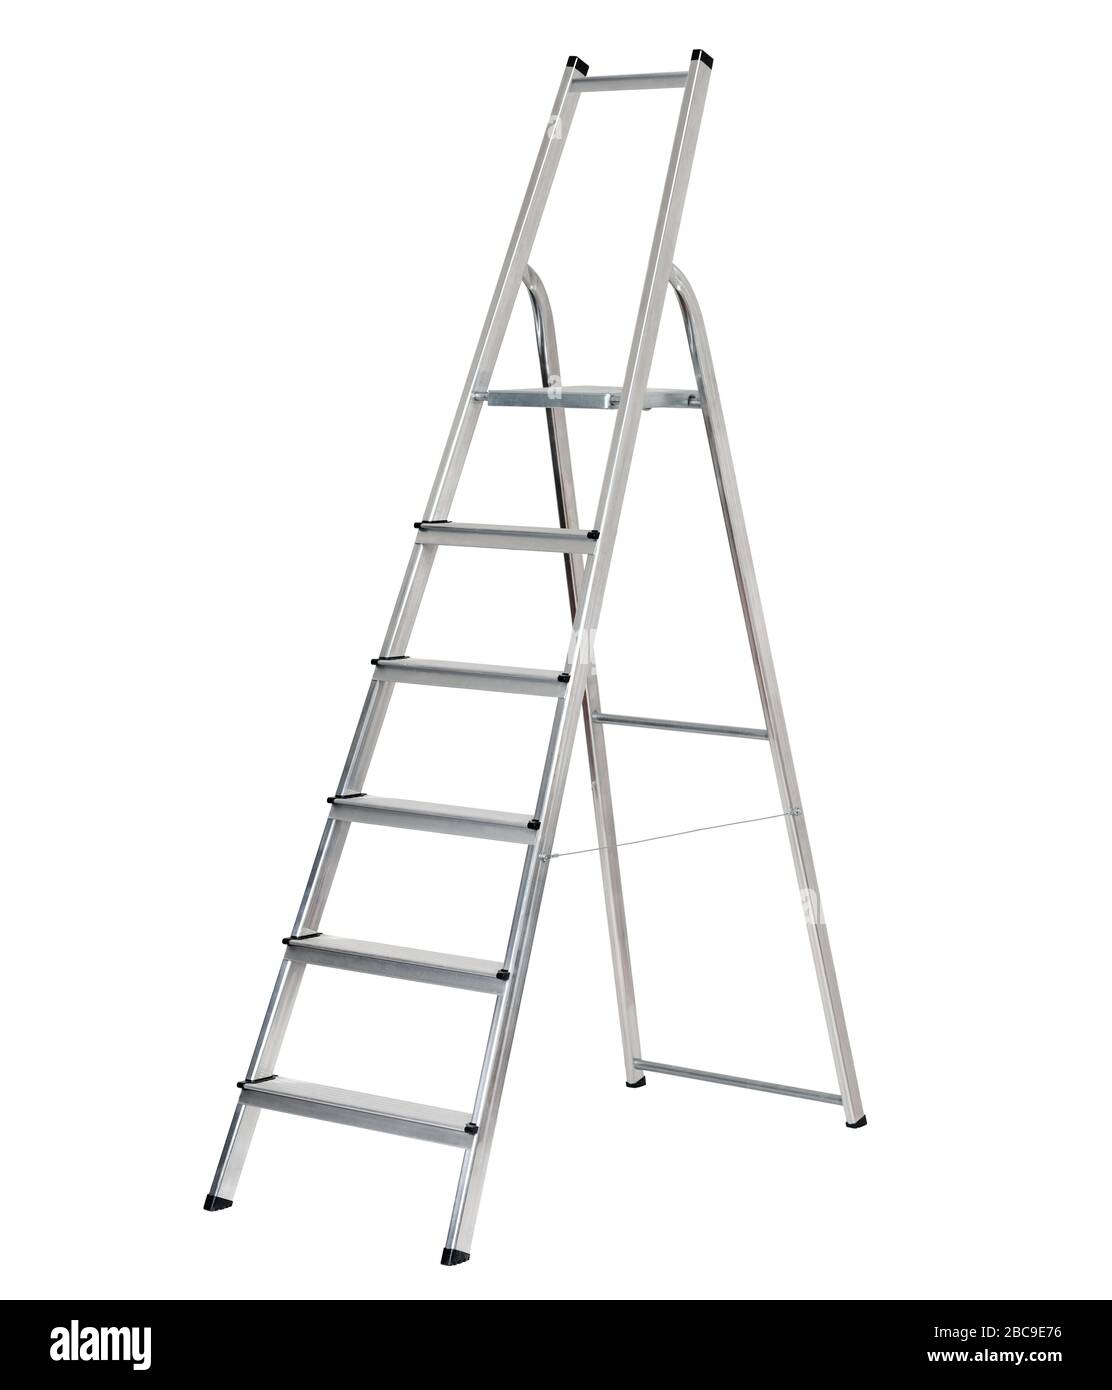 Aluminium folding step ladder Stock Photo